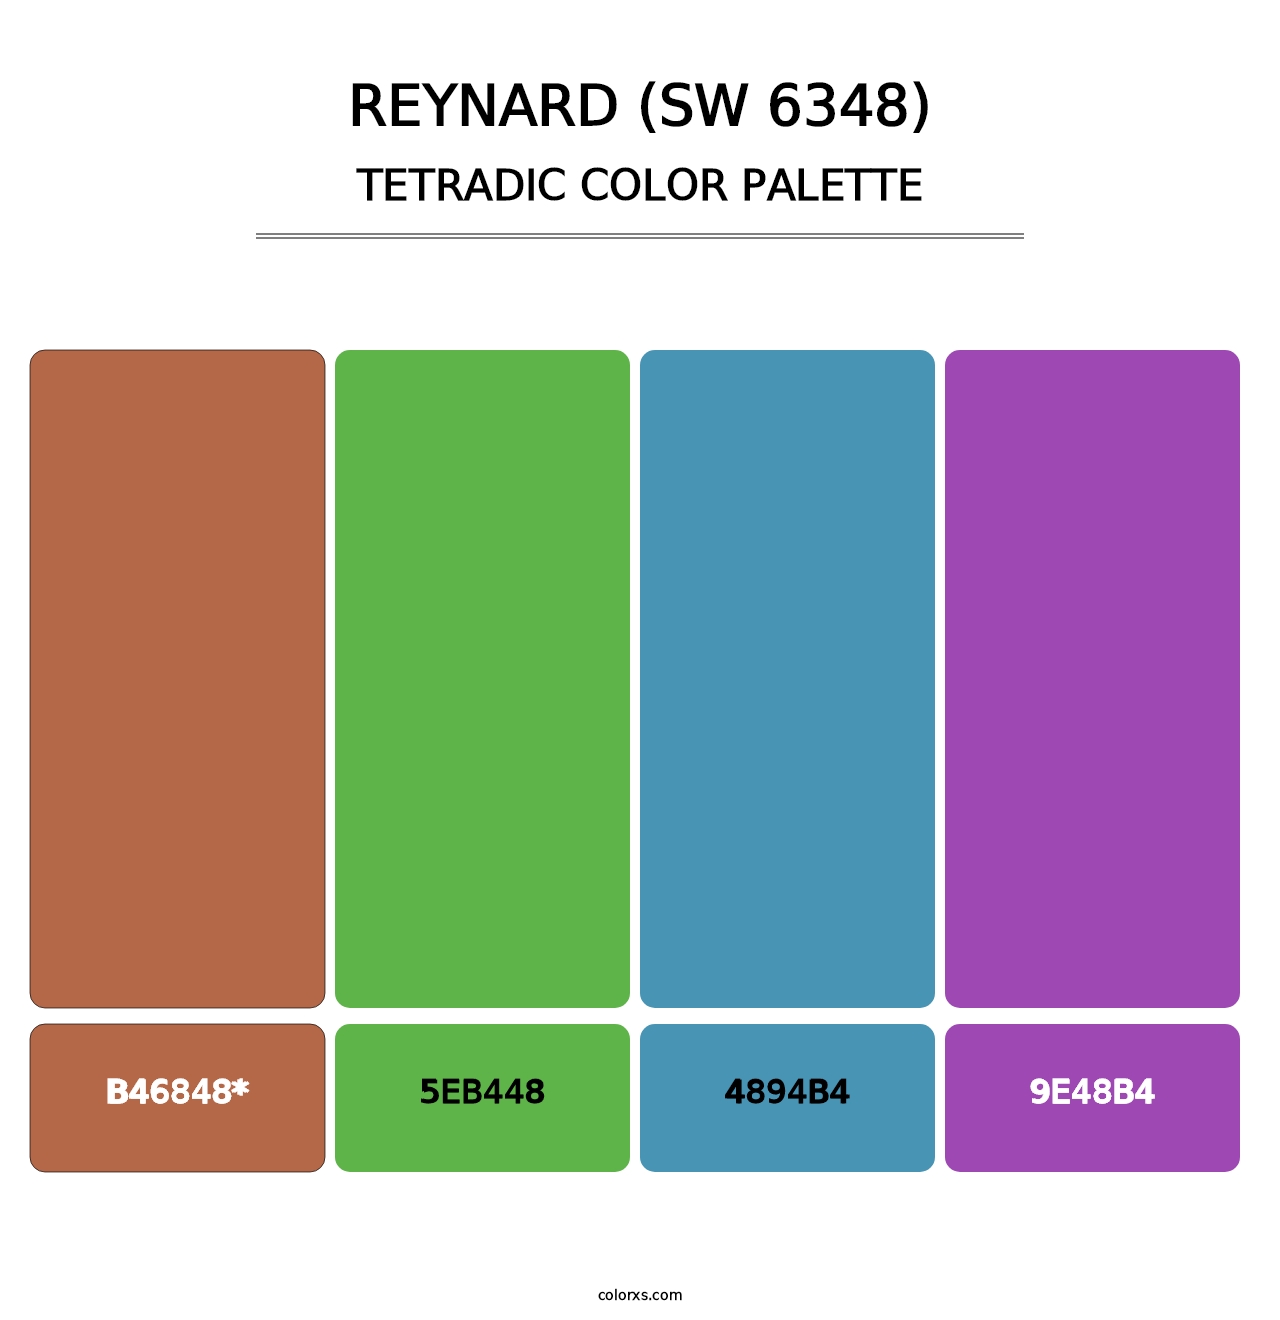 Reynard (SW 6348) - Tetradic Color Palette